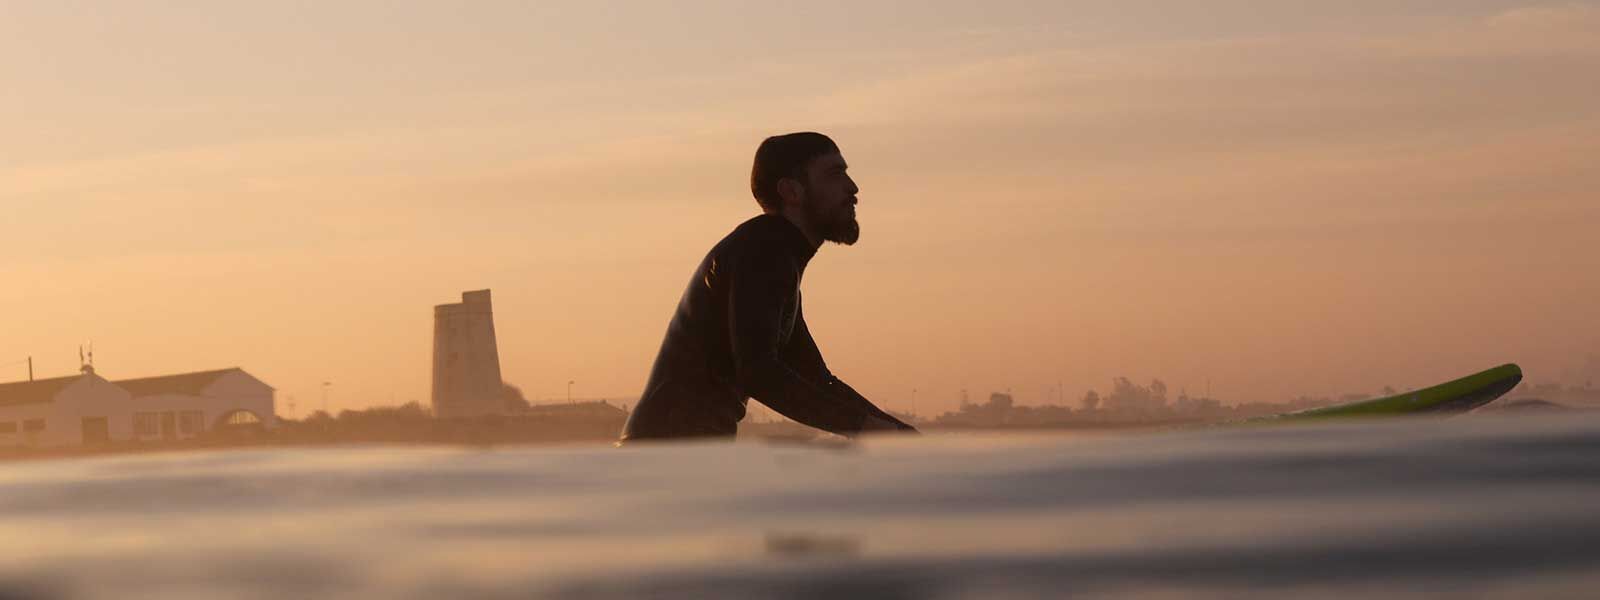 Surfen trotz Corona Virus in Spanien